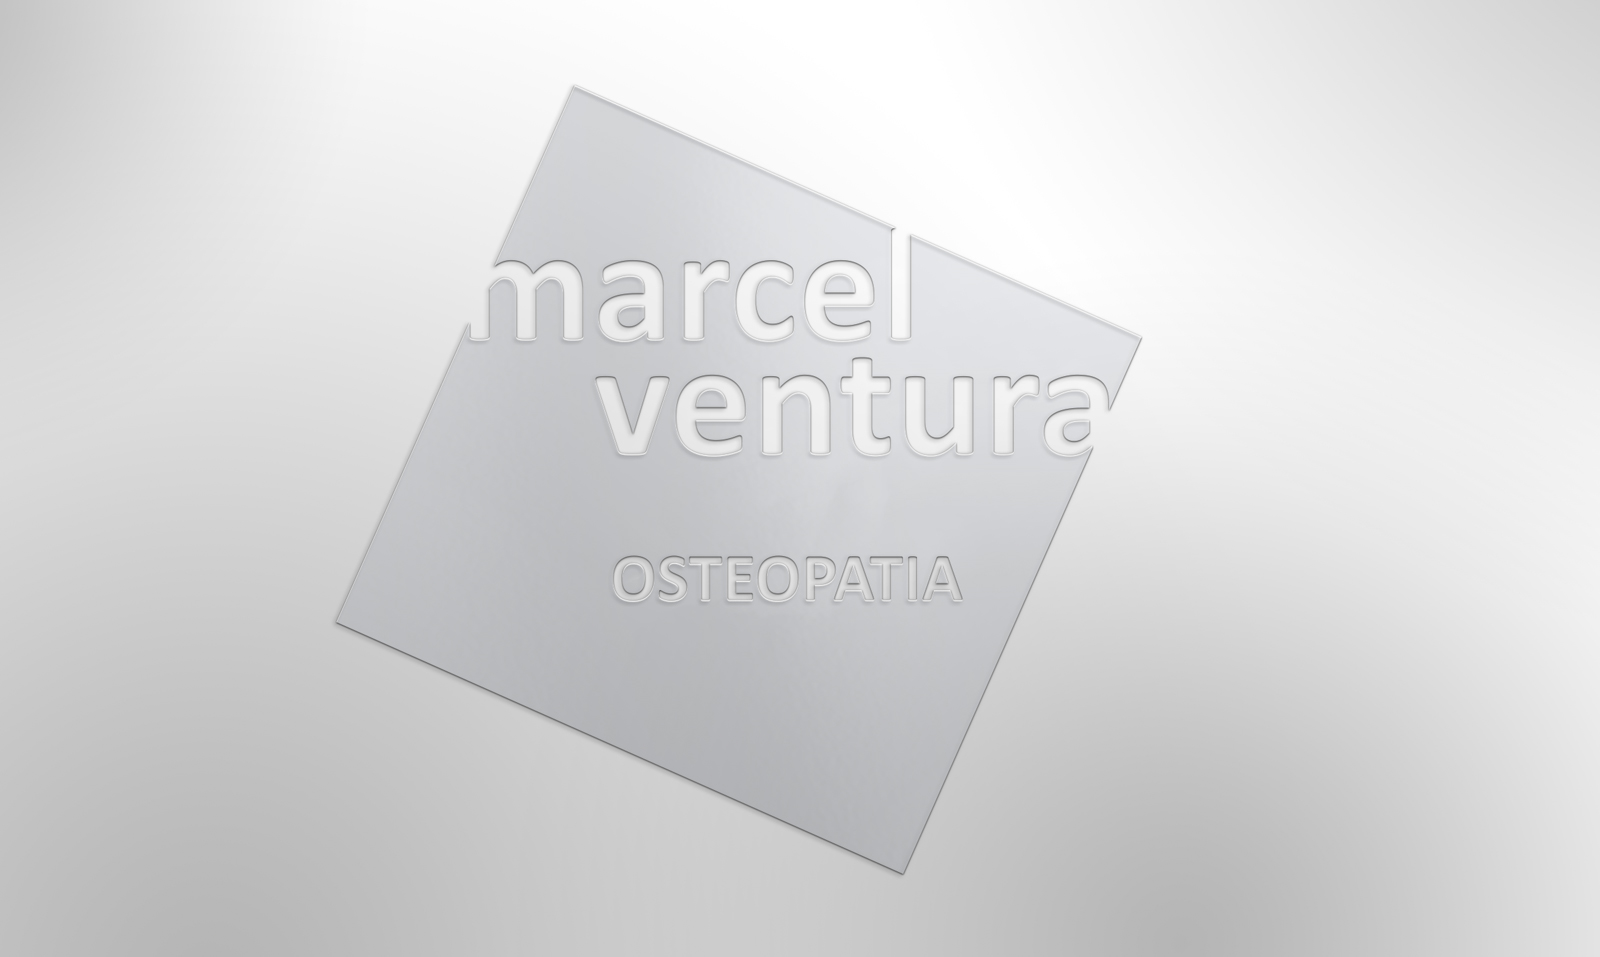 Diseño de logo y marca de osteopatía para médico osteópata